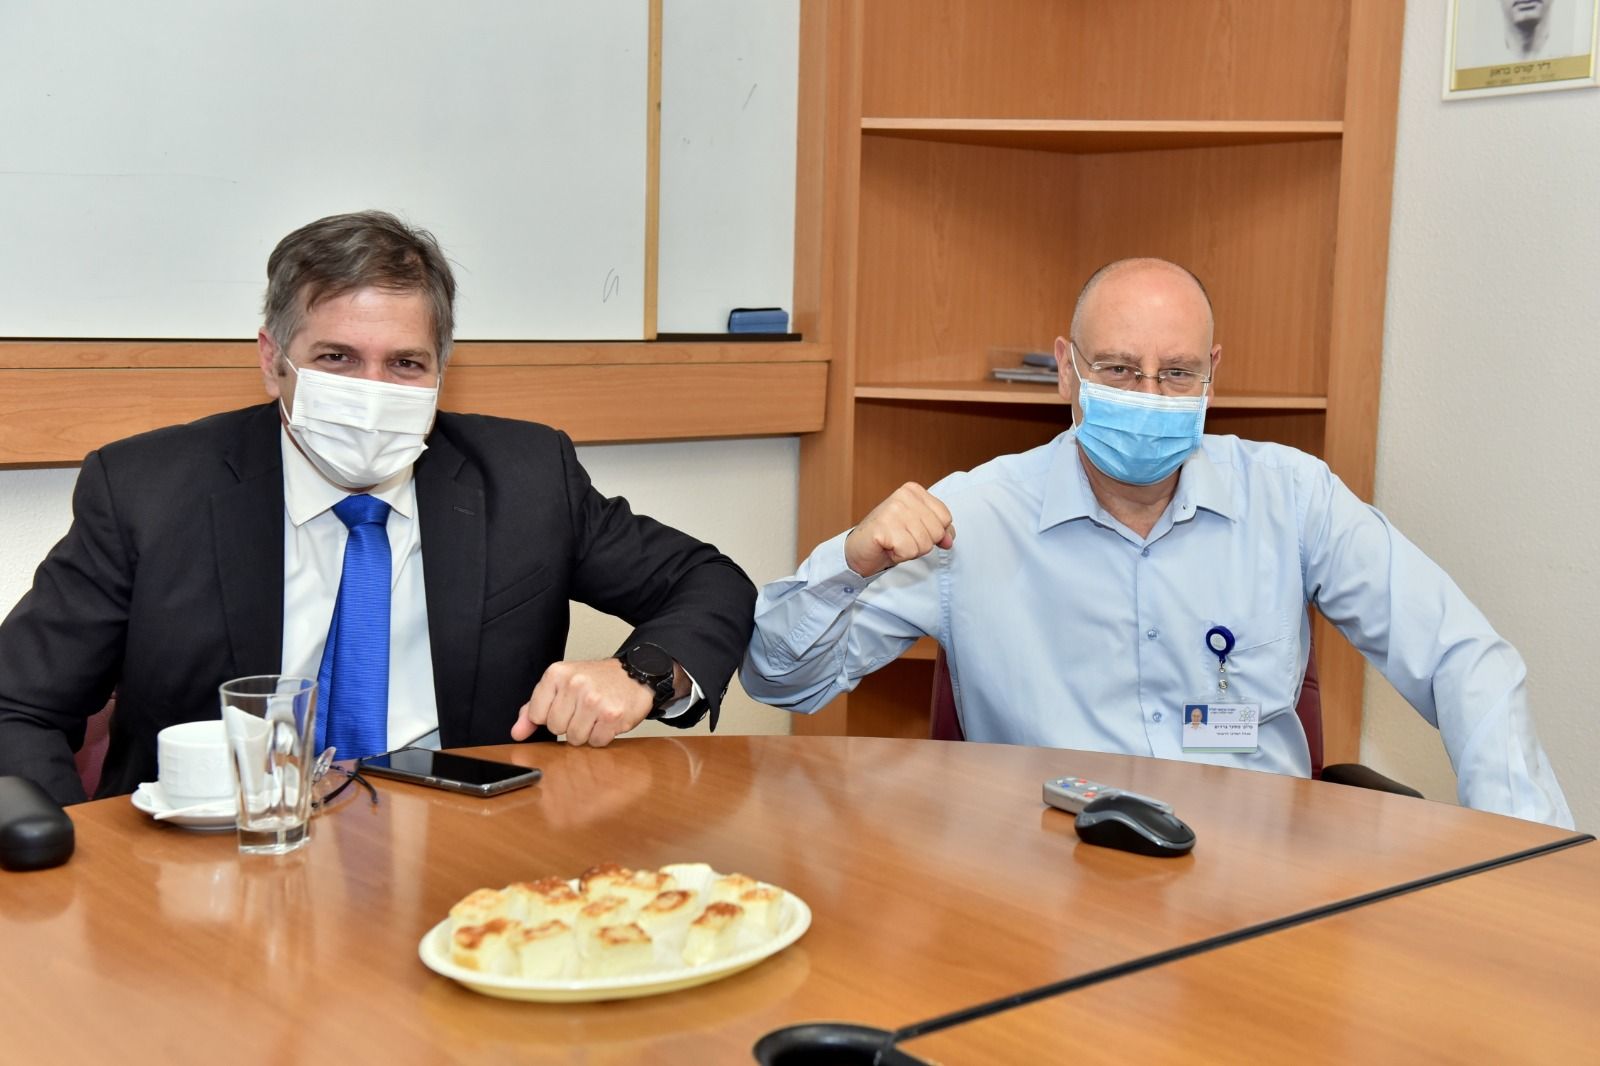 The Deputy Minister of Health, Yova Kish visits Galilee Medical Center